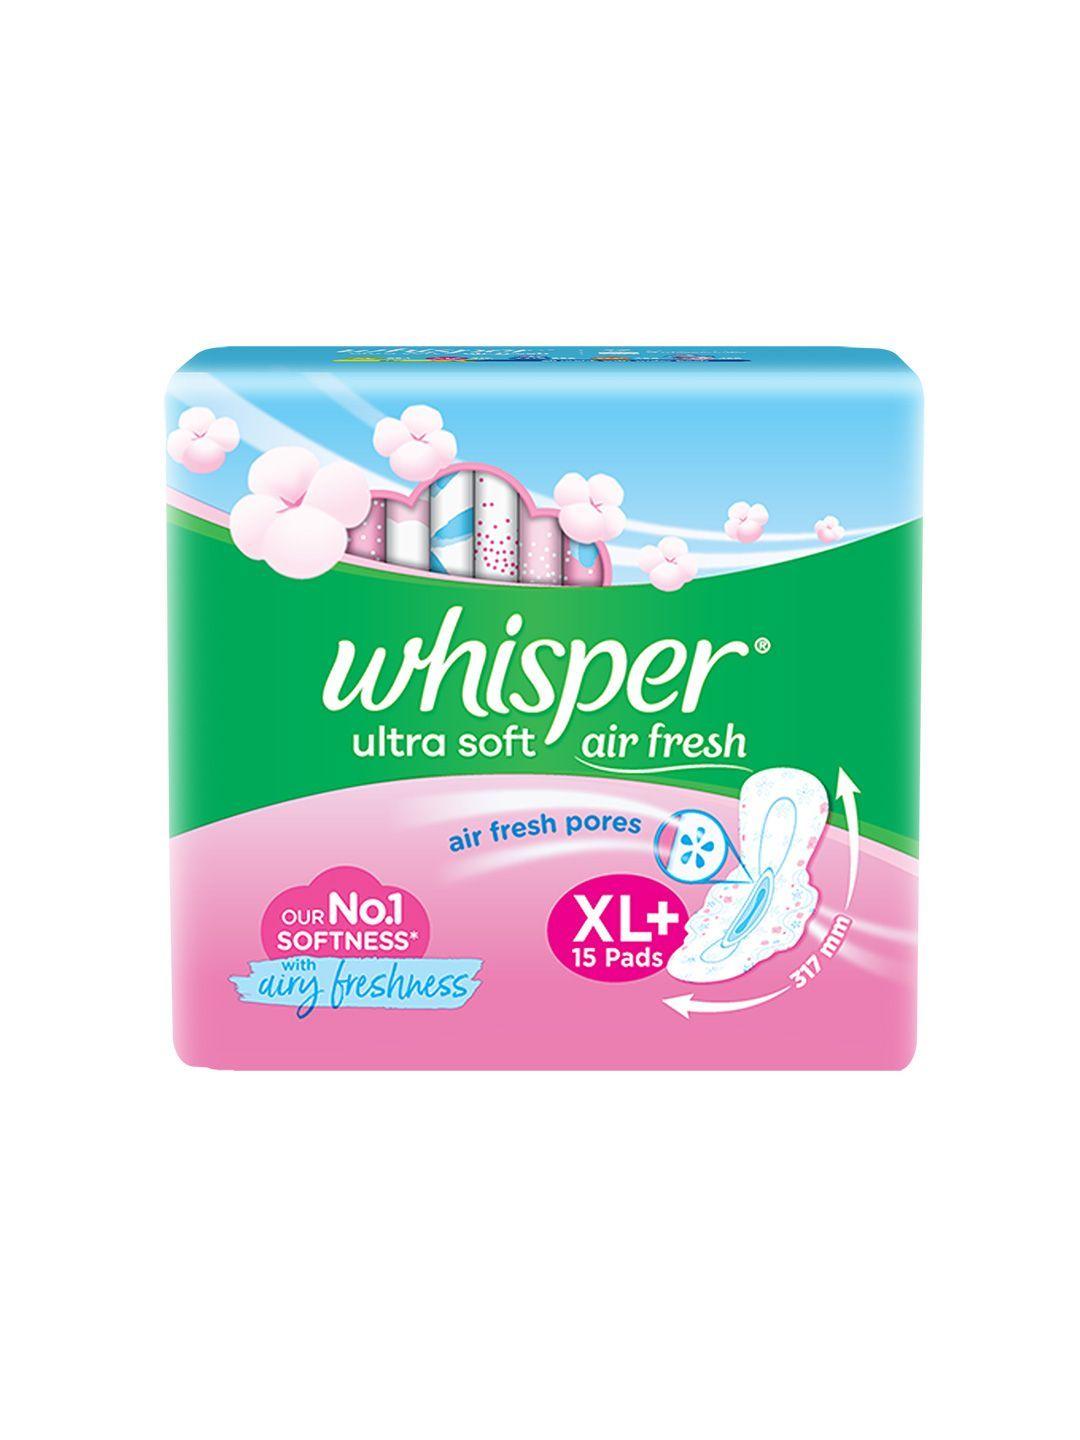 whisper ultra soft xl+ sanitary pads - 15 pads